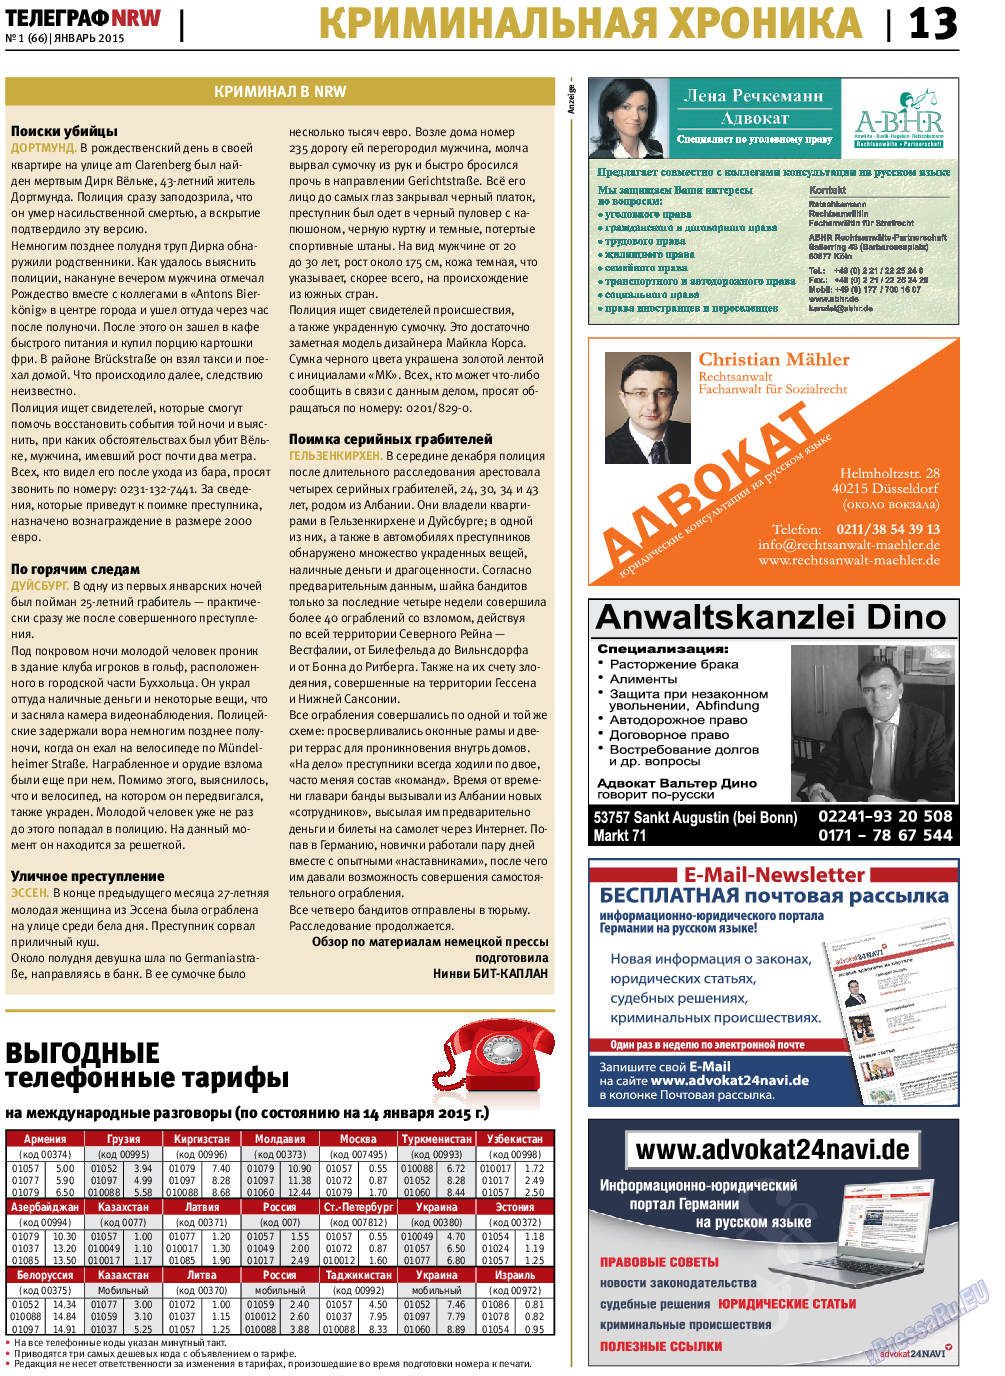 Телеграф NRW, газета. 2015 №1 стр.13